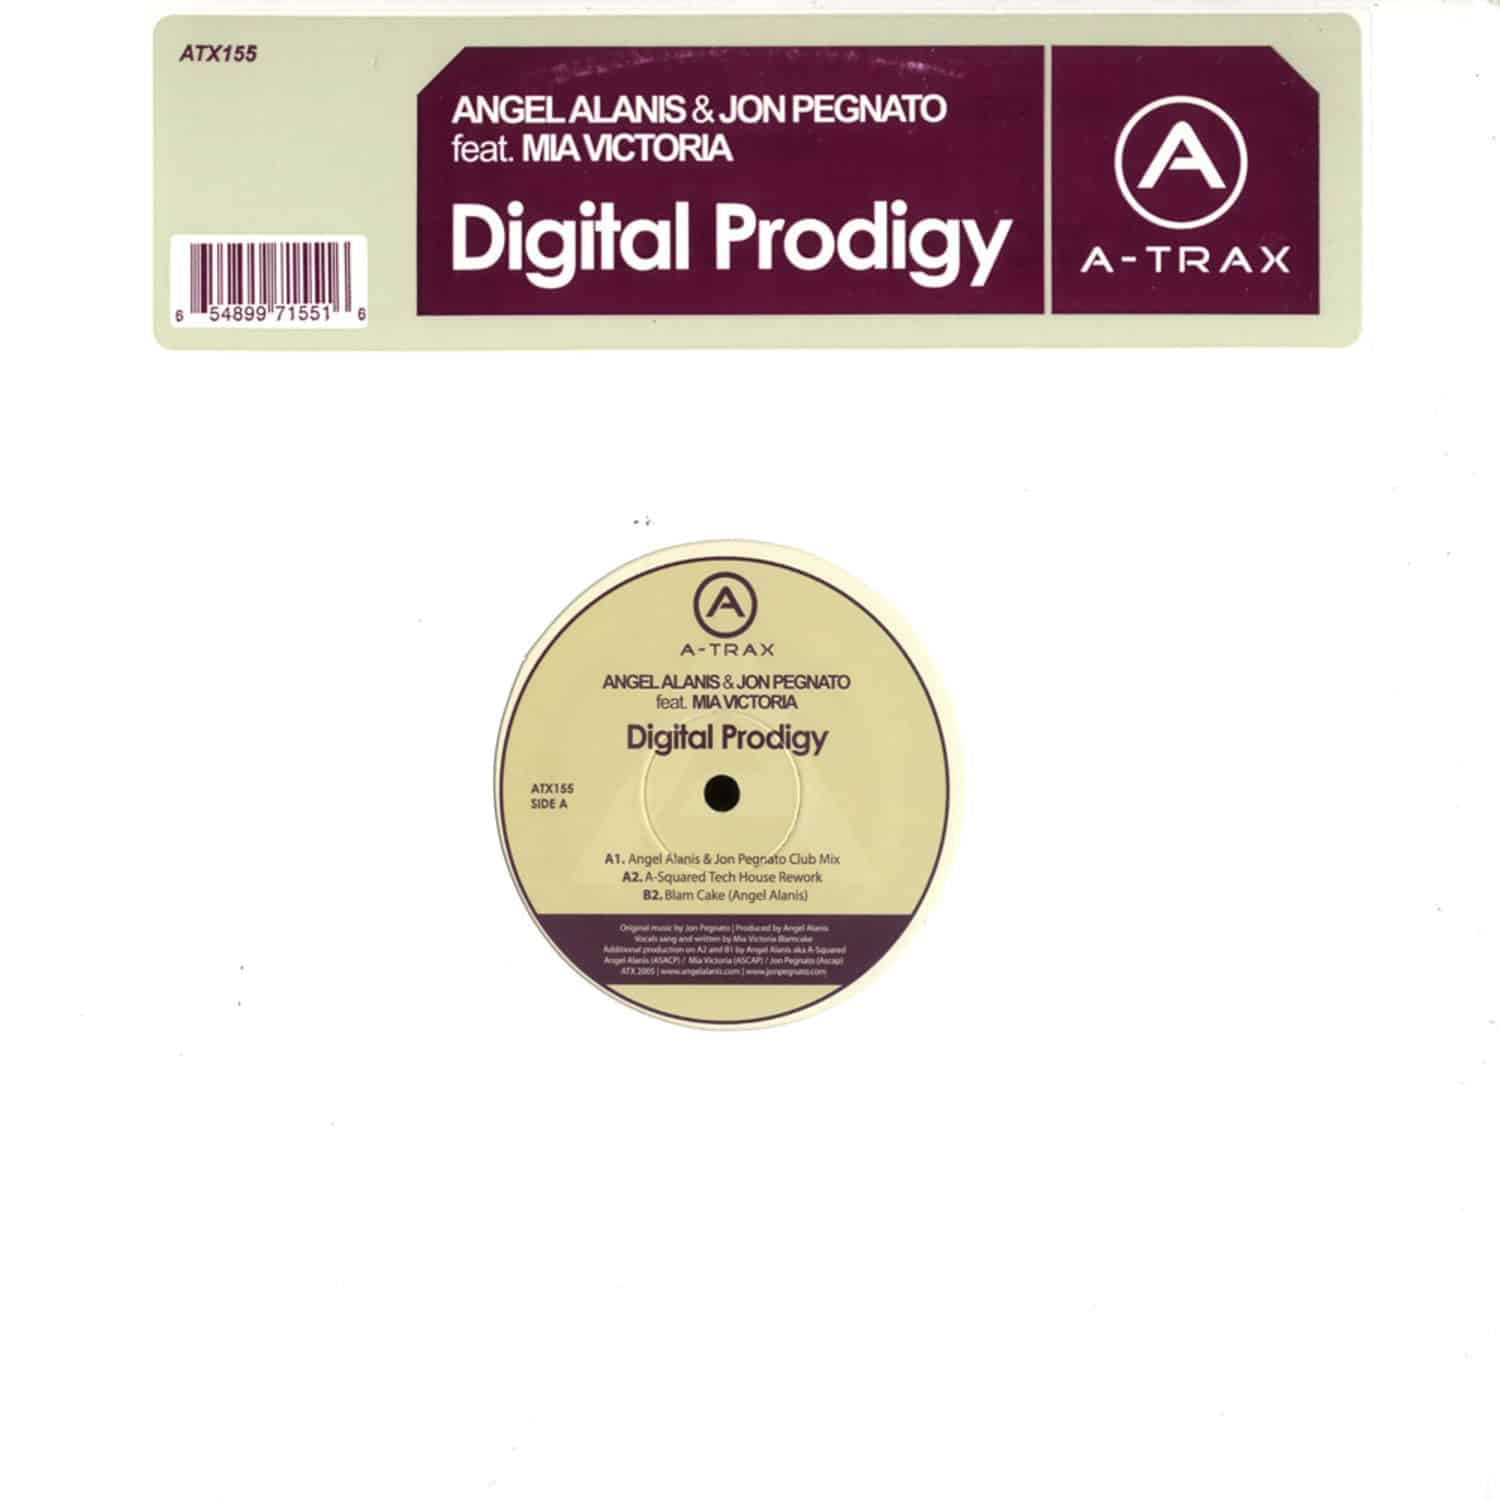 Angel Alanis & Jon Pegnato feat. Mia Victoria - DIGITAL PRODIGY